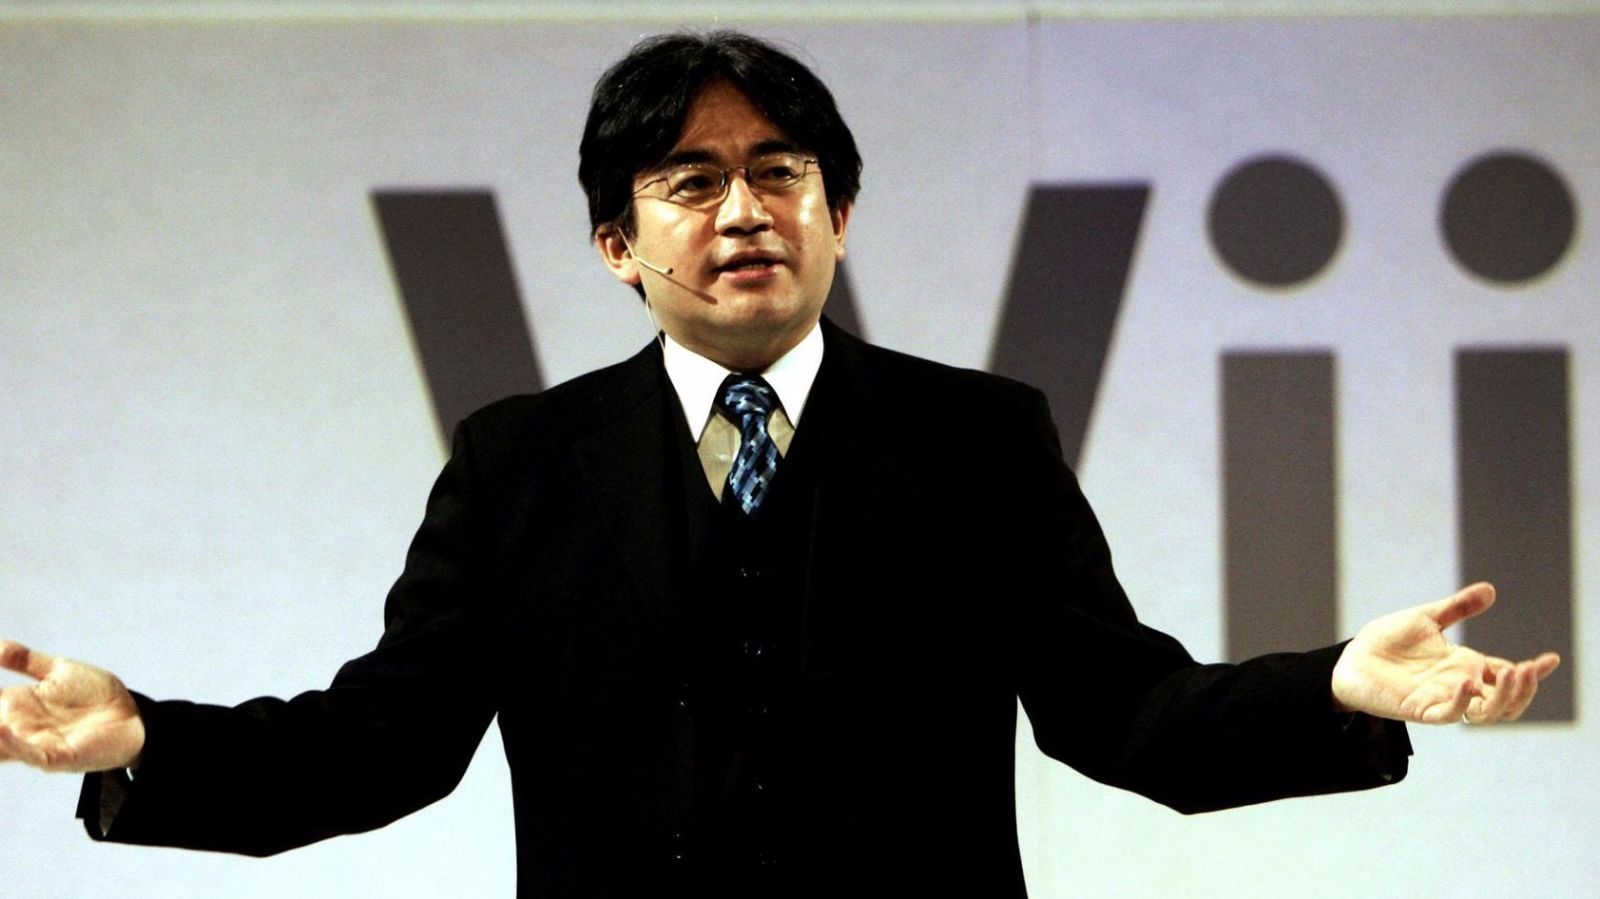 Satoru Iwata, Nintendo Chief Executive, Dies at 55 - The New York